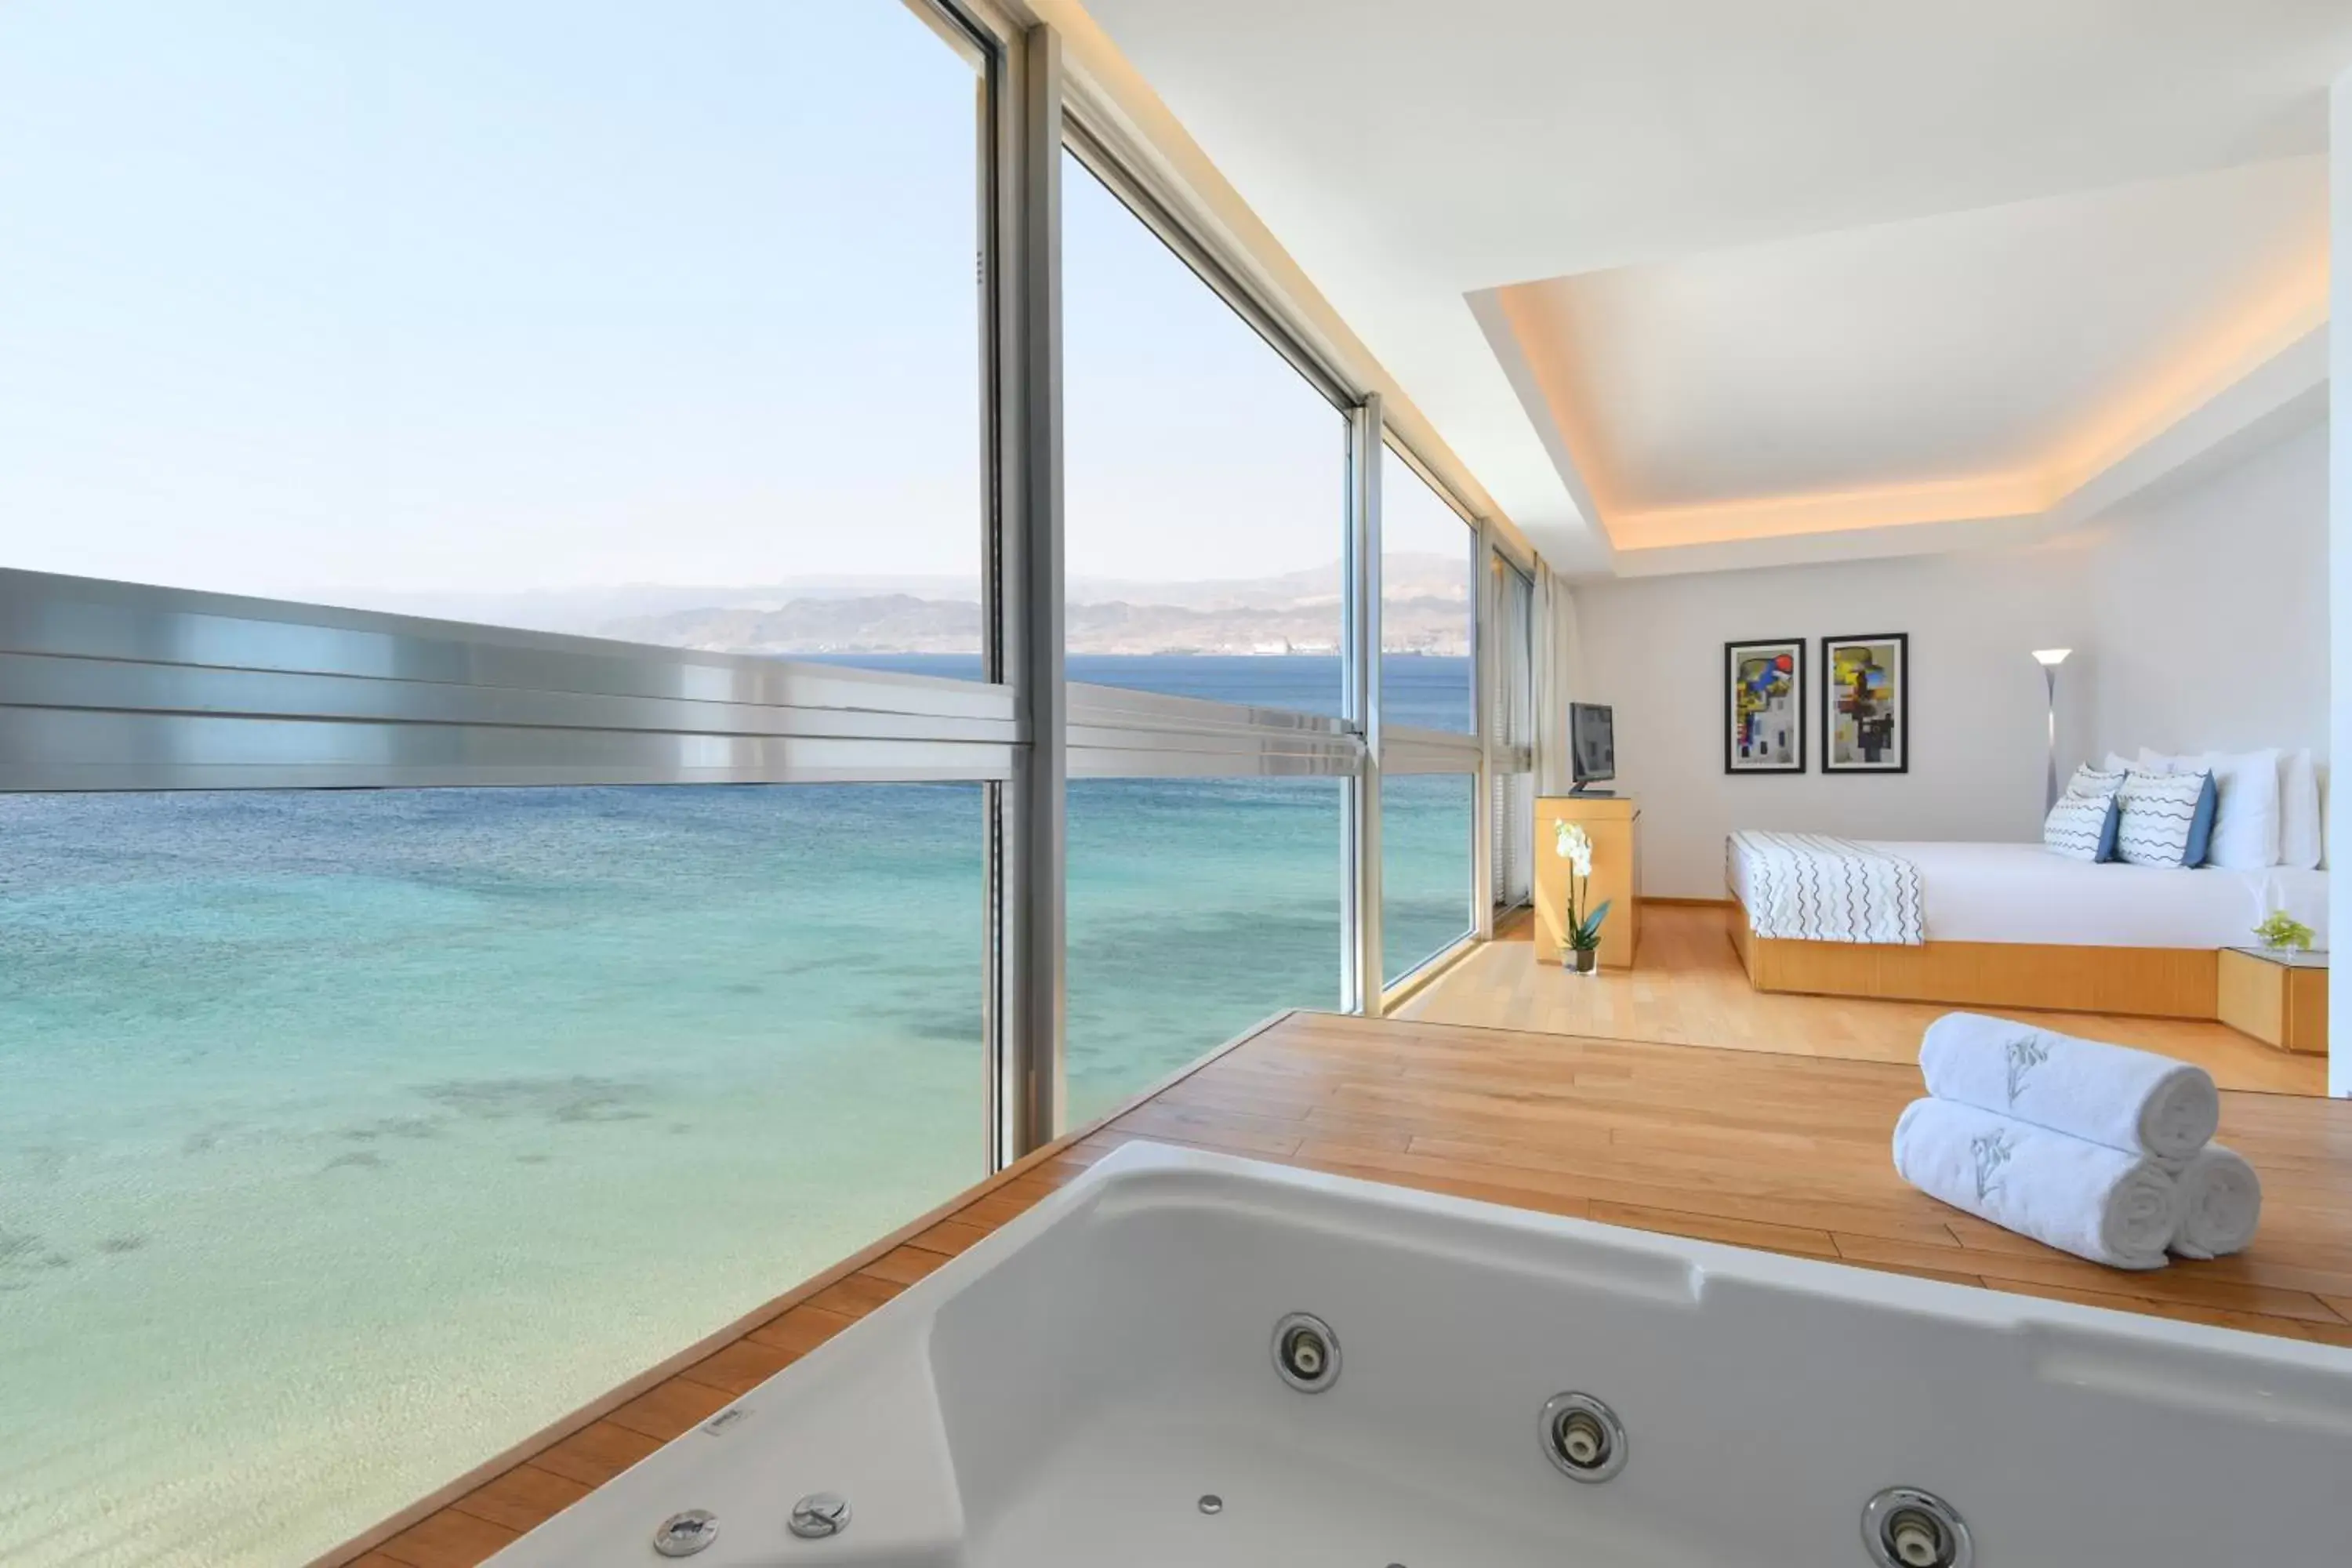 Bedroom in Kempinski Hotel Aqaba